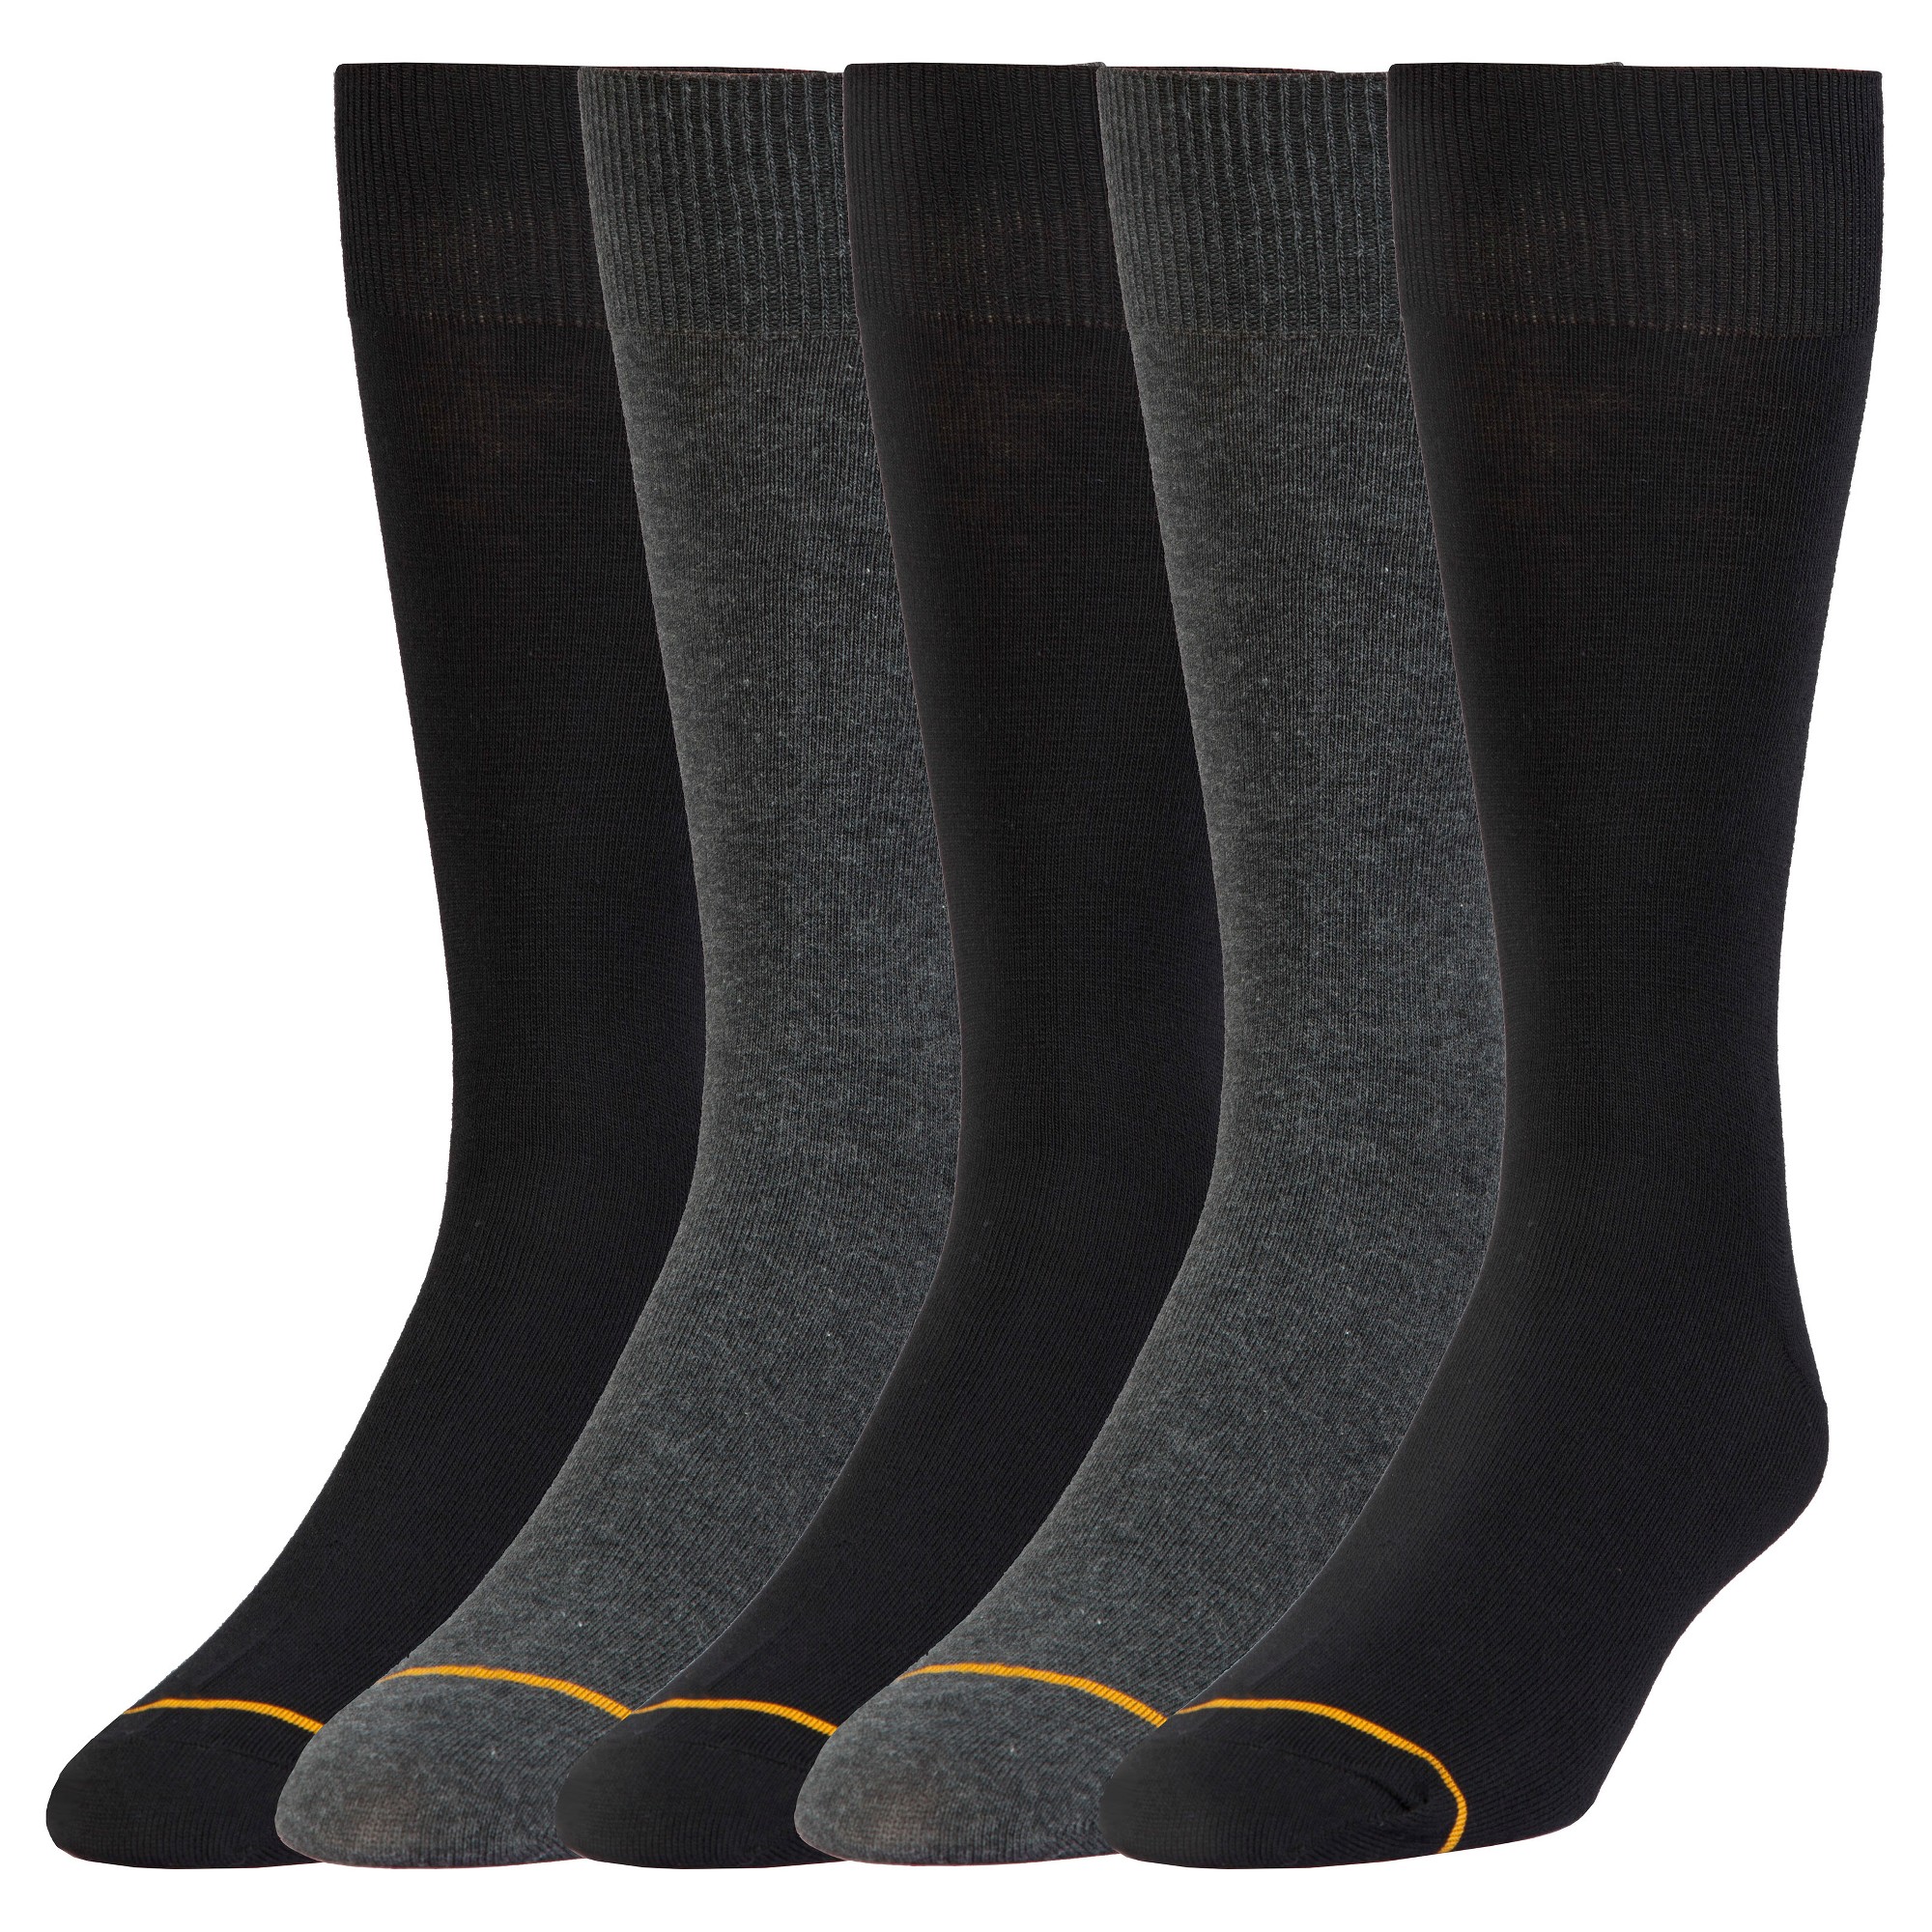 Signature Gold by GOLDTOE Men's Flatknit Crew Socks 5pk - Black/Charcoal 6-12, Men's, Black/Grey